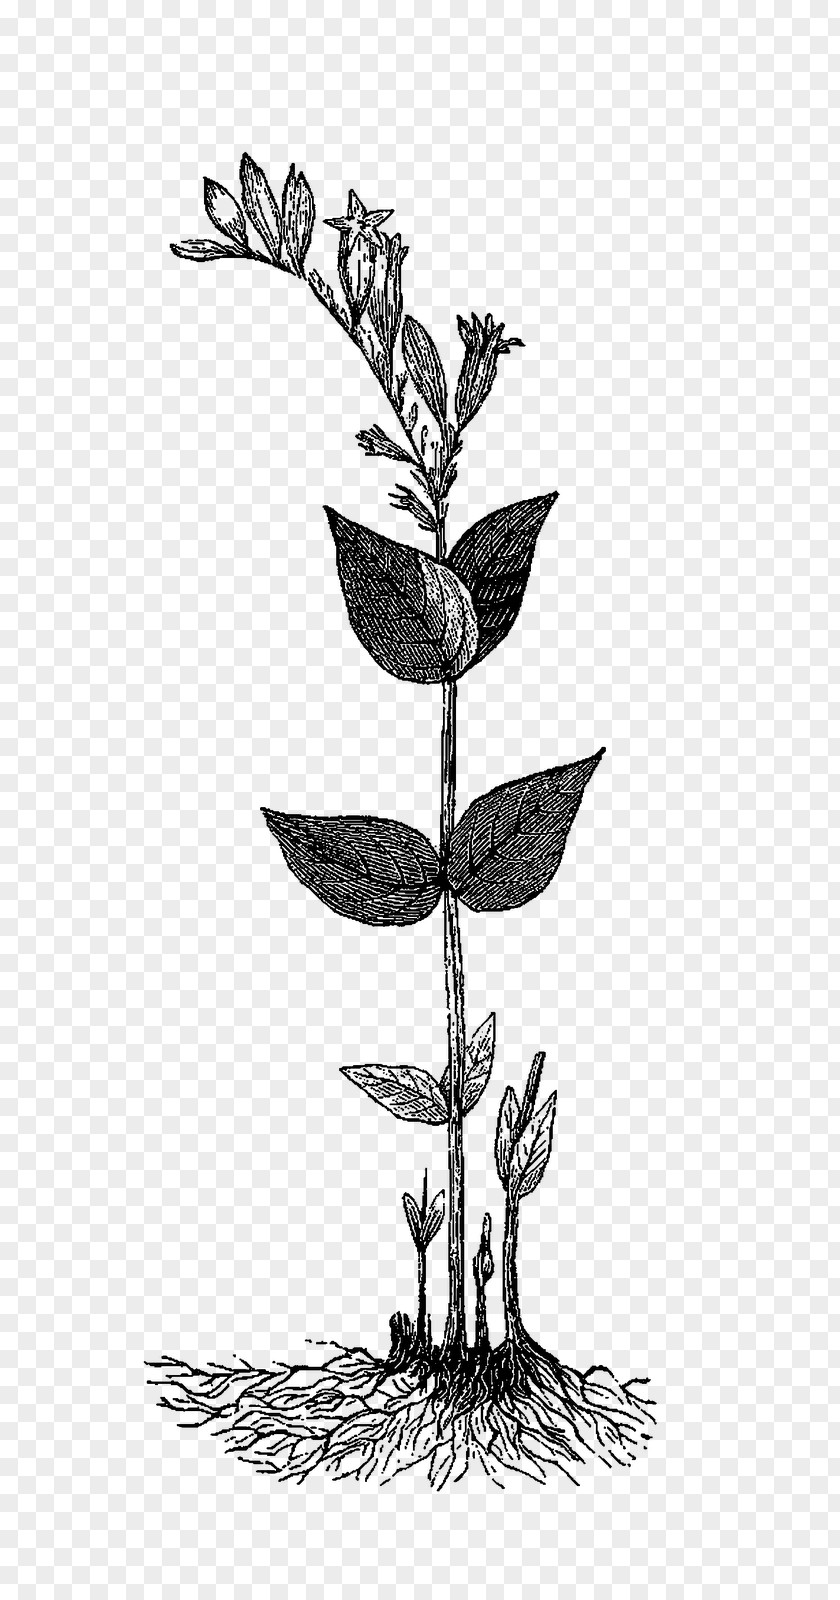 Twig /m/02csf Drawing Plant Stem Flower PNG